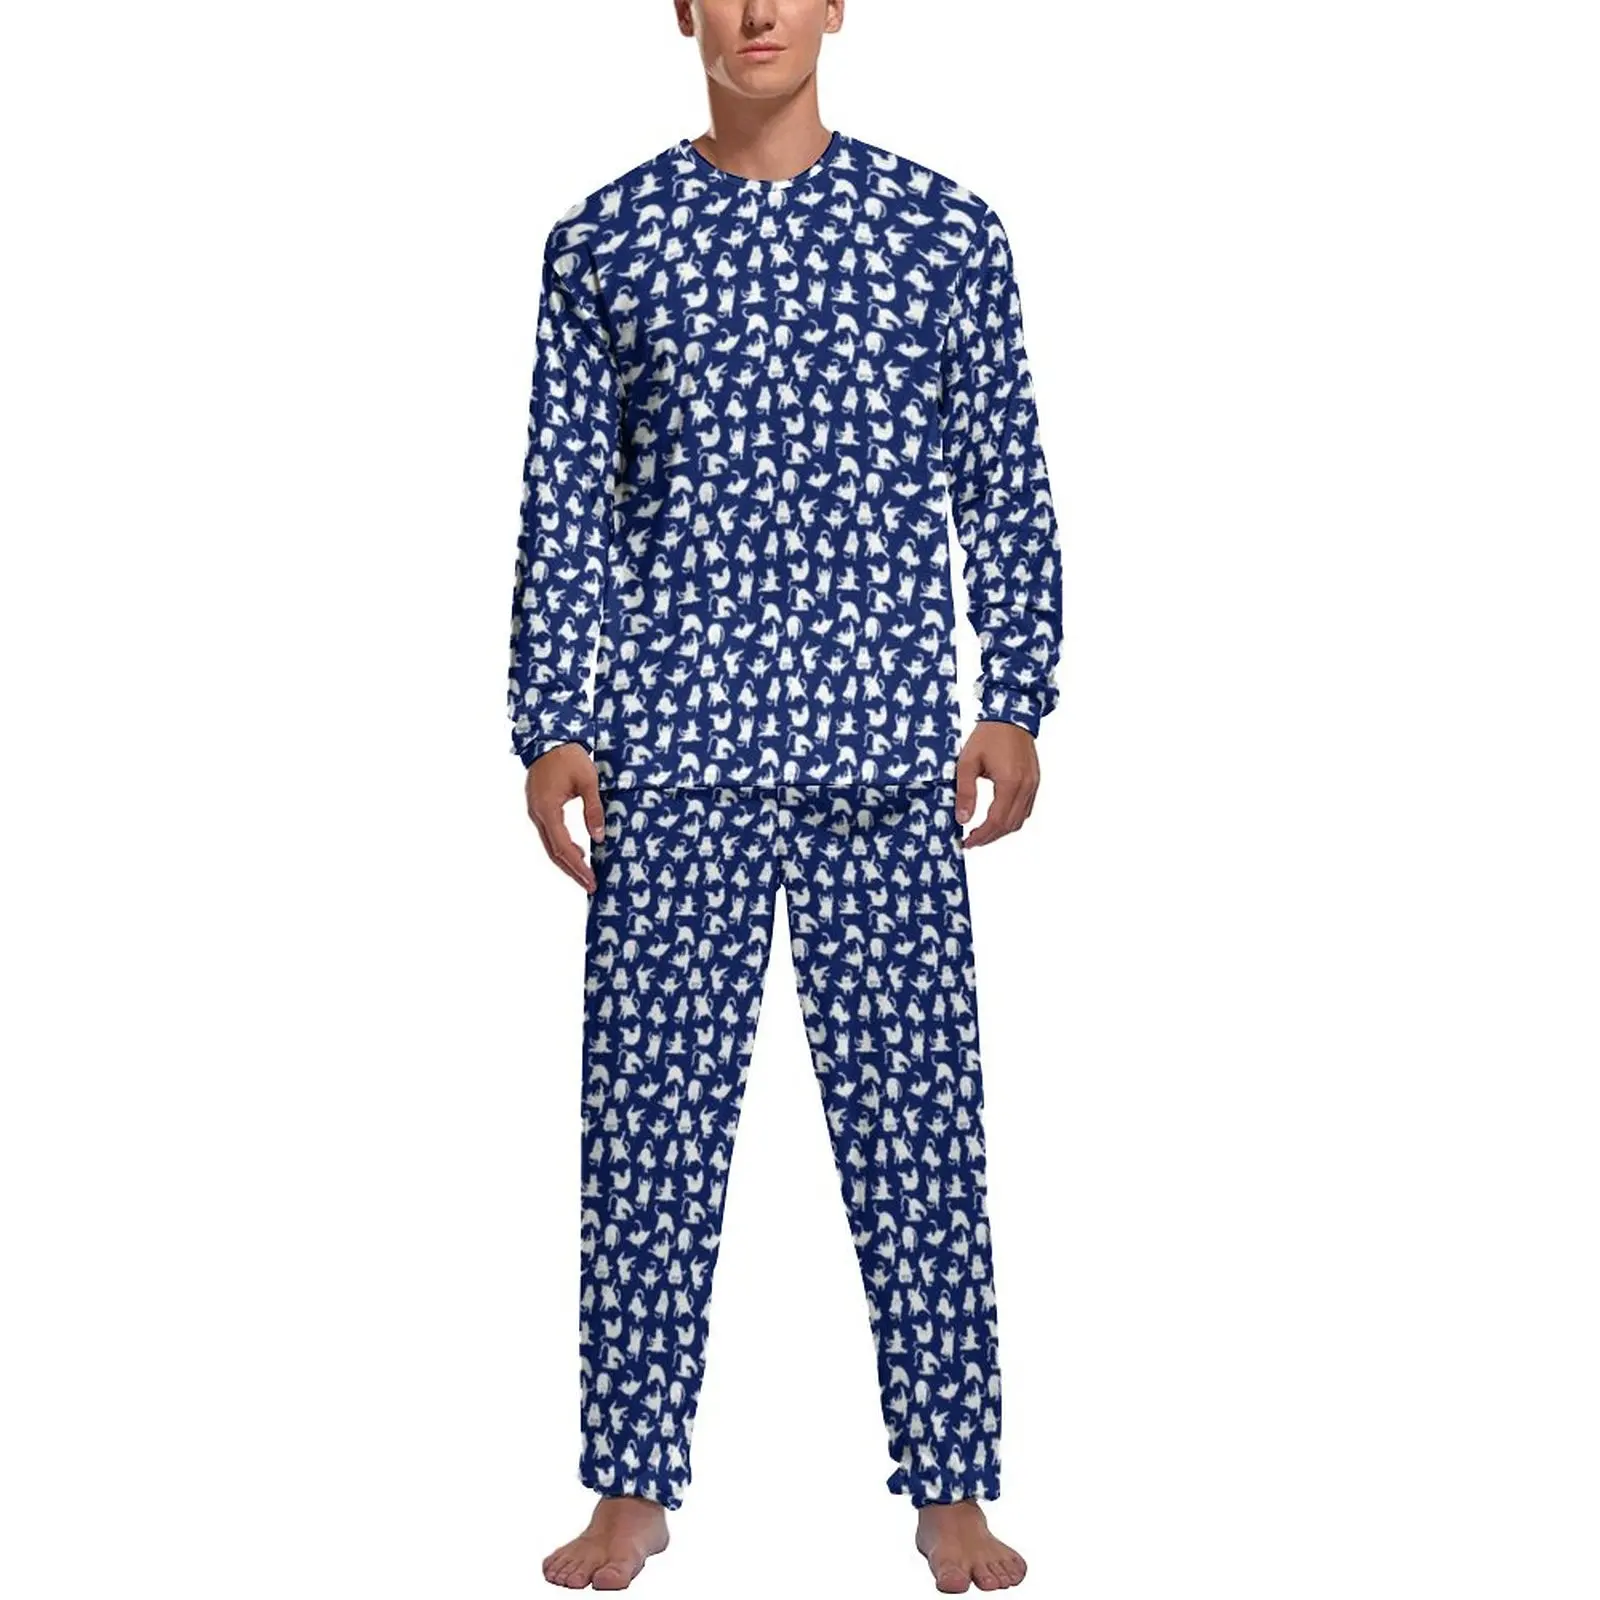 Blue Funny Cat Pajamas Yoga Sports Man Long-Sleeve Kawaii Pajama Sets 2 Pieces Aesthetic Autumn Graphic Sleepwear Gift Idea